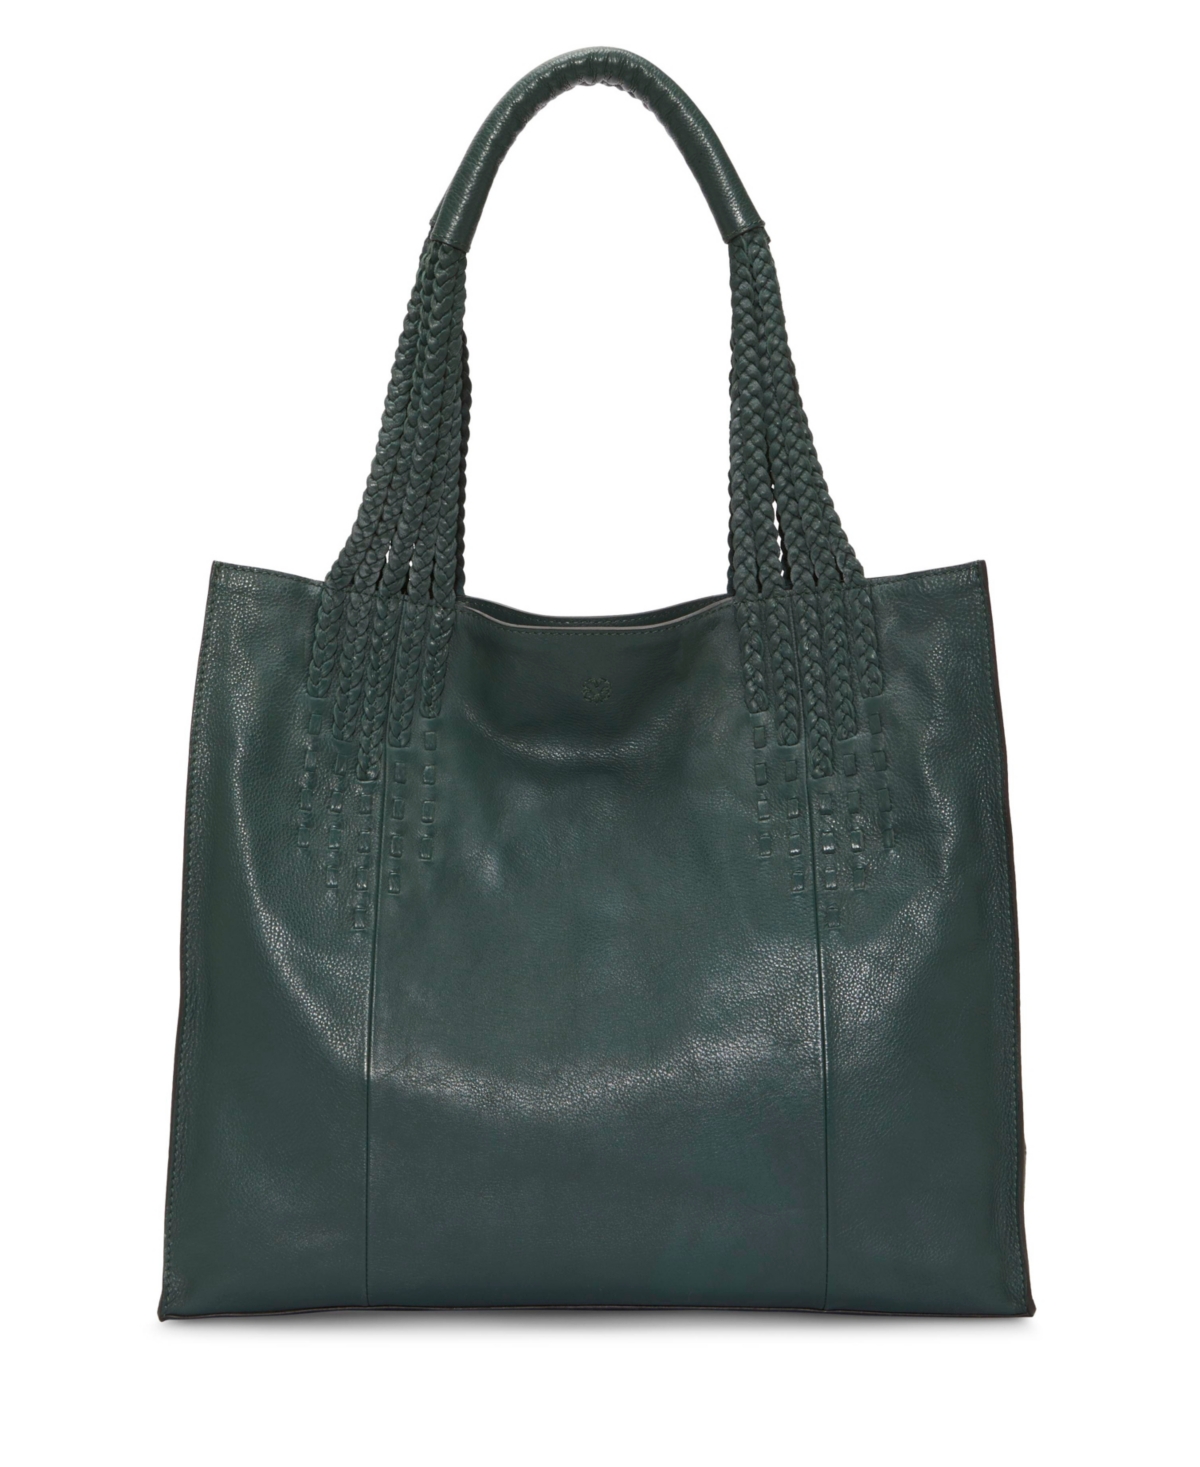 LUCKY BRAND Bags for Women | ModeSens